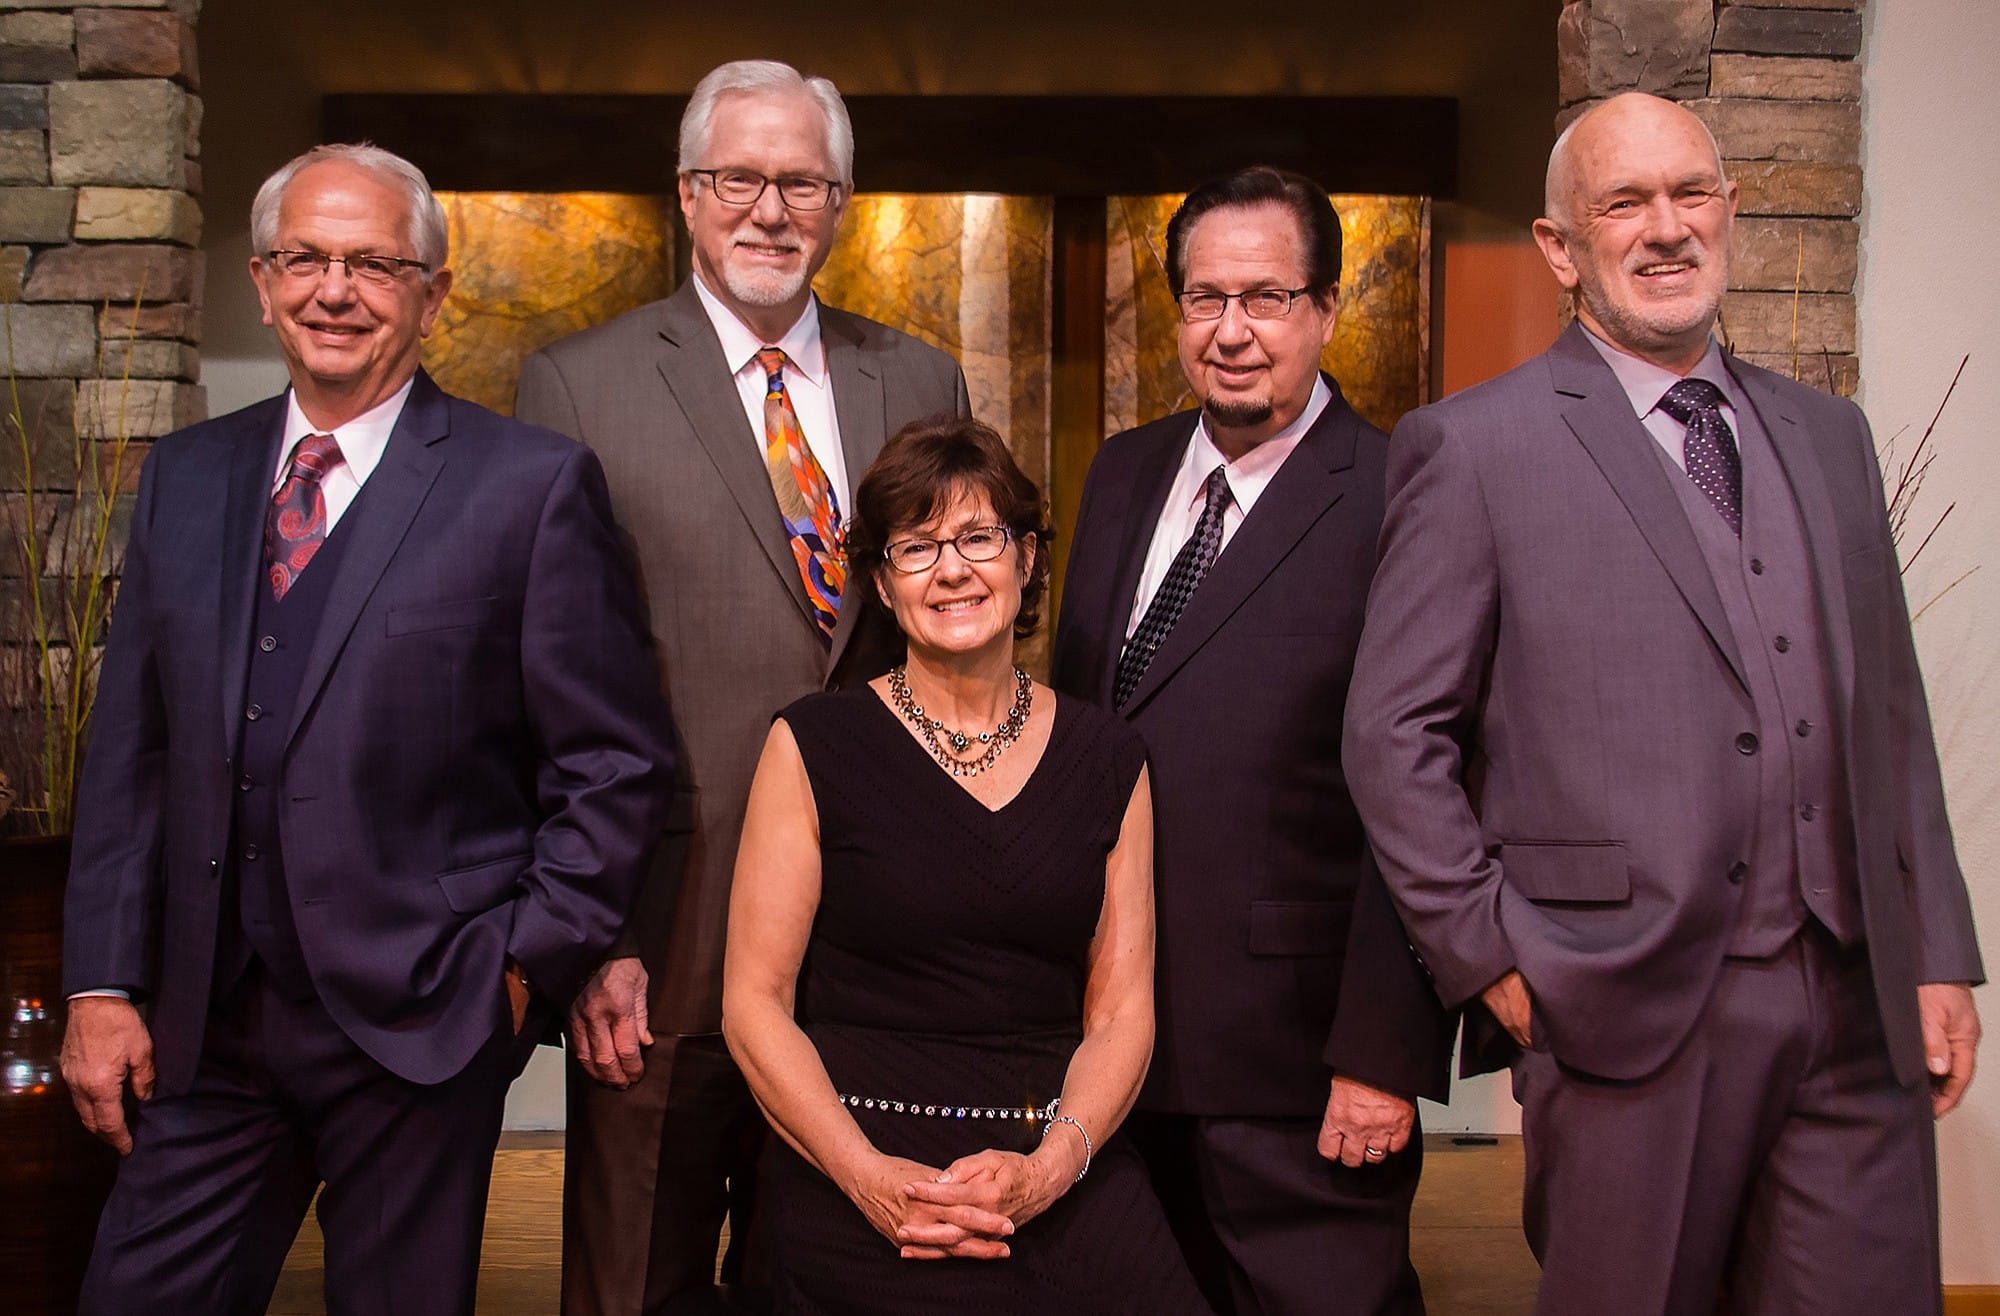 The Classic Gospel Sons: Stan Kirschenmann, from left, Jerry Watson, Bobbi Kay Kirschenmann, Don Smith and Terry VanderStoep.